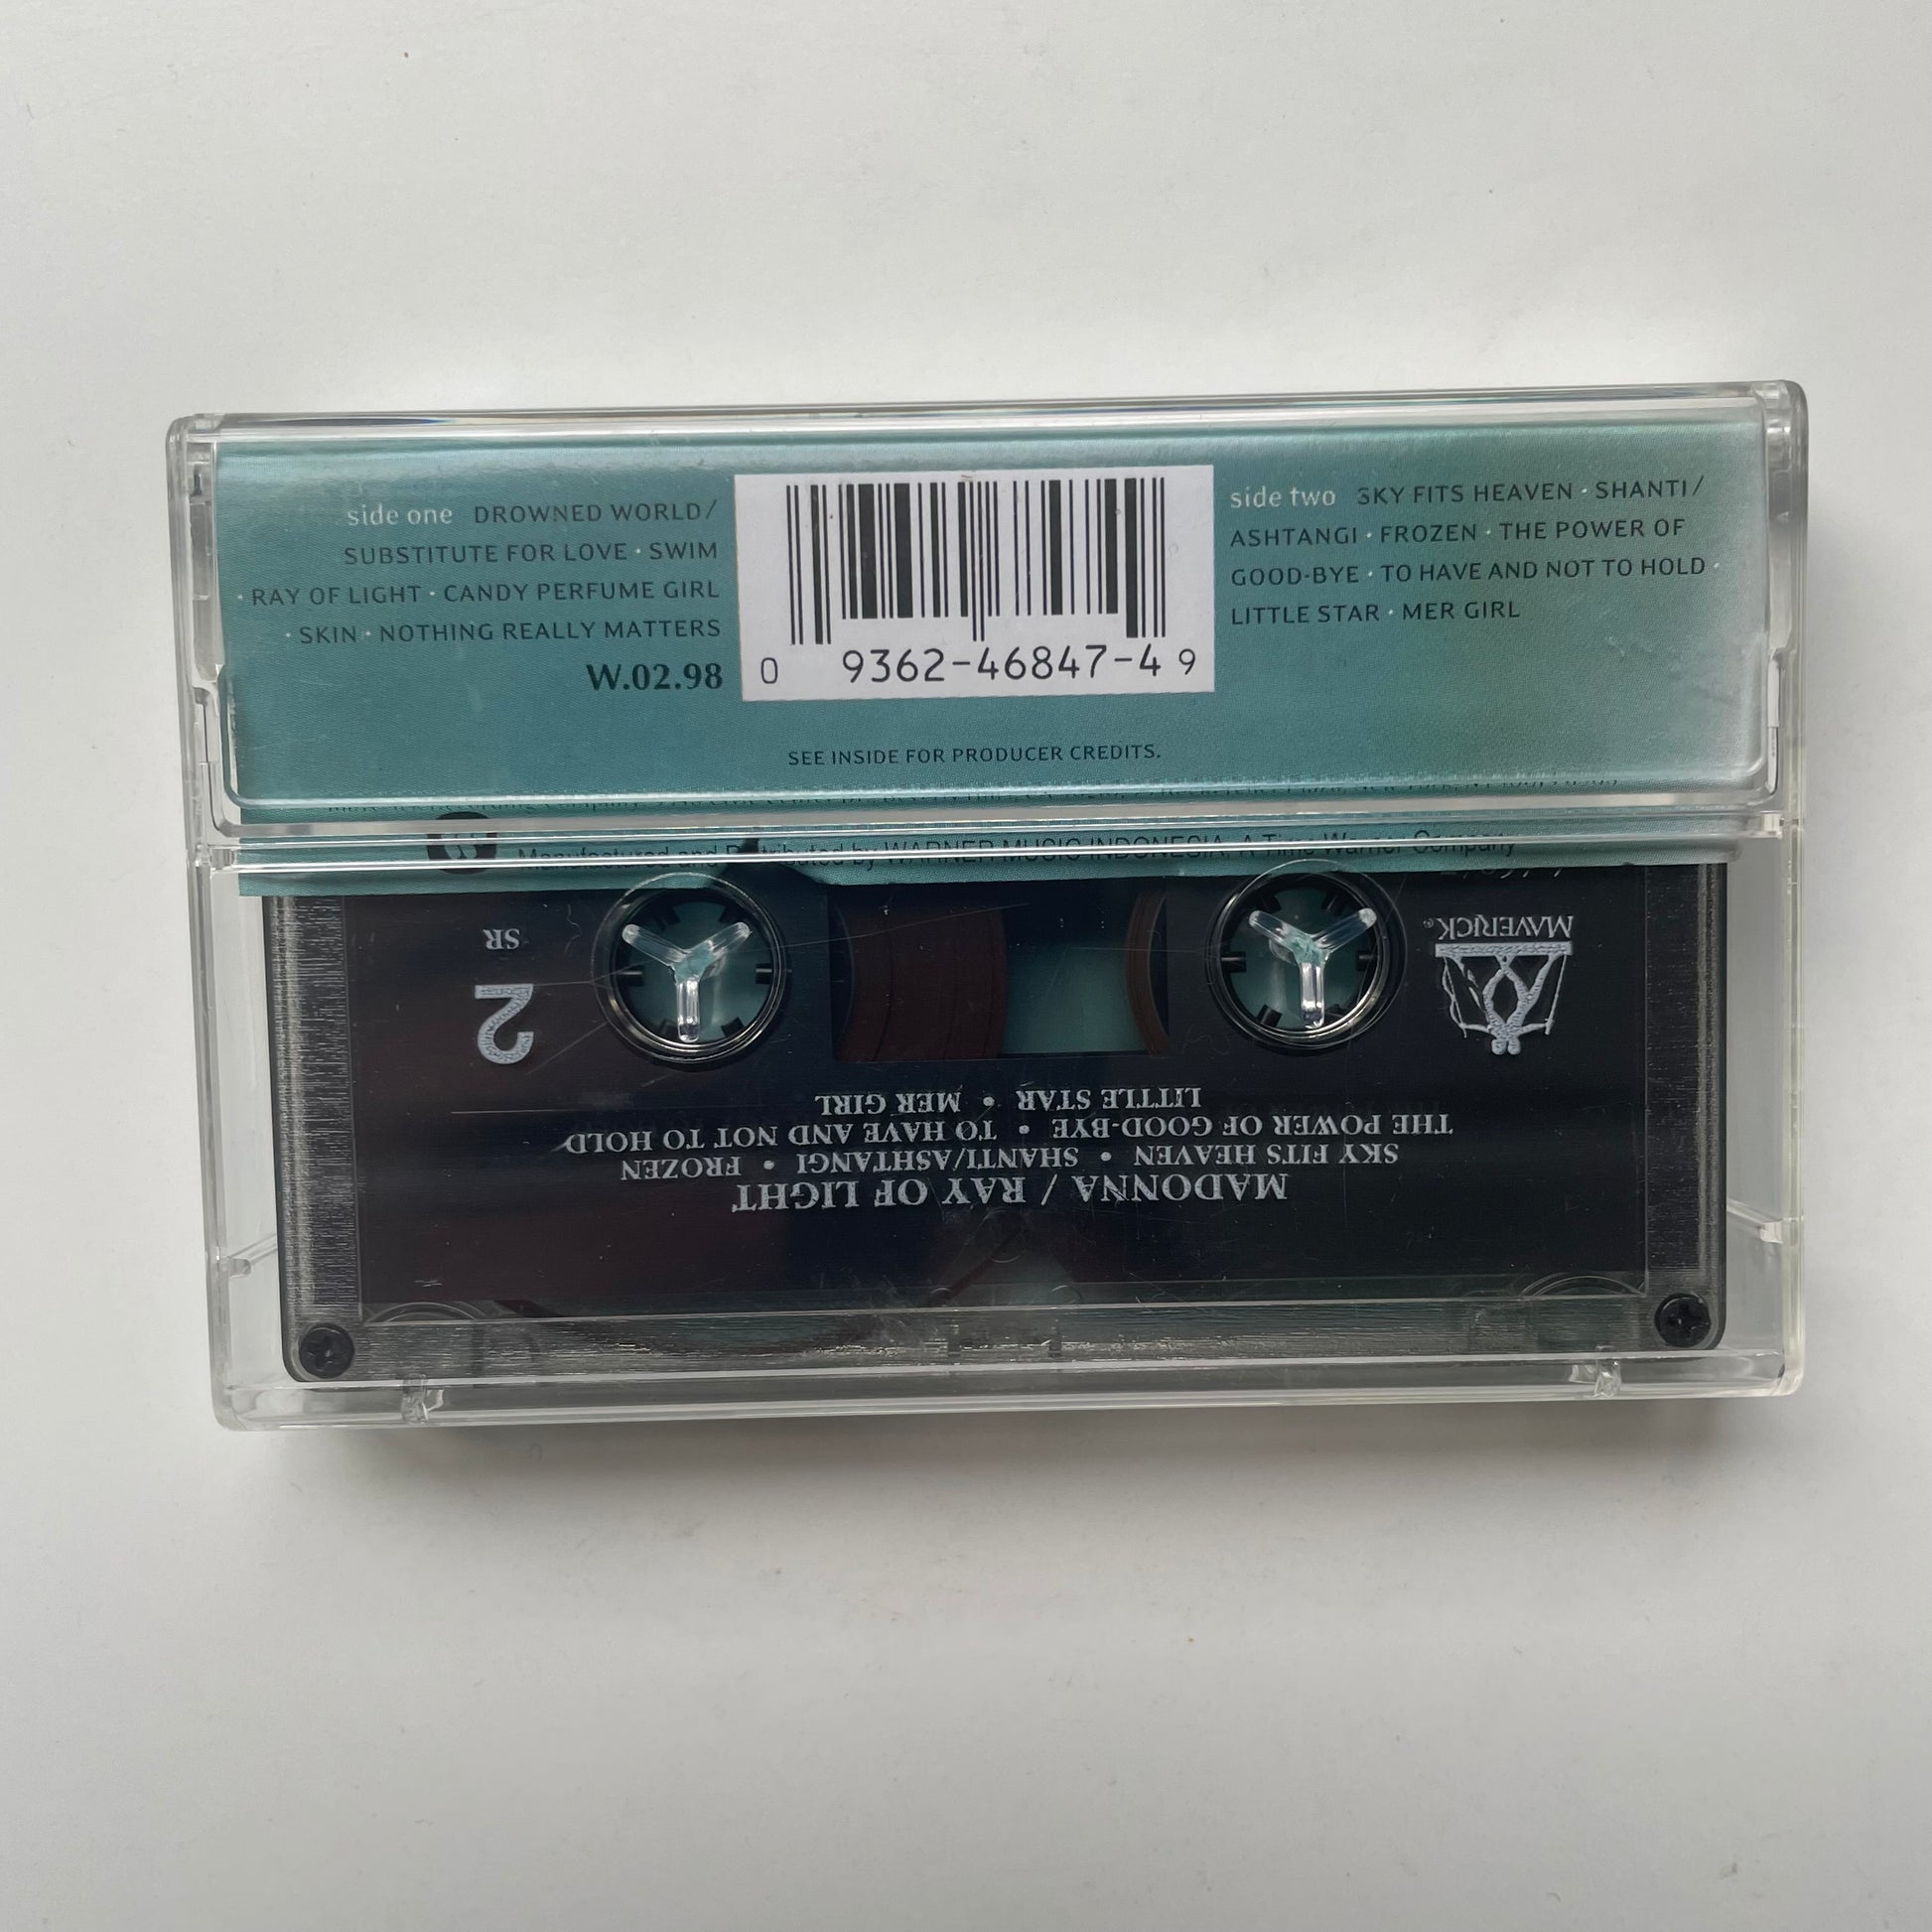 Tape Cassette Madonna Ray of Light 1998 back